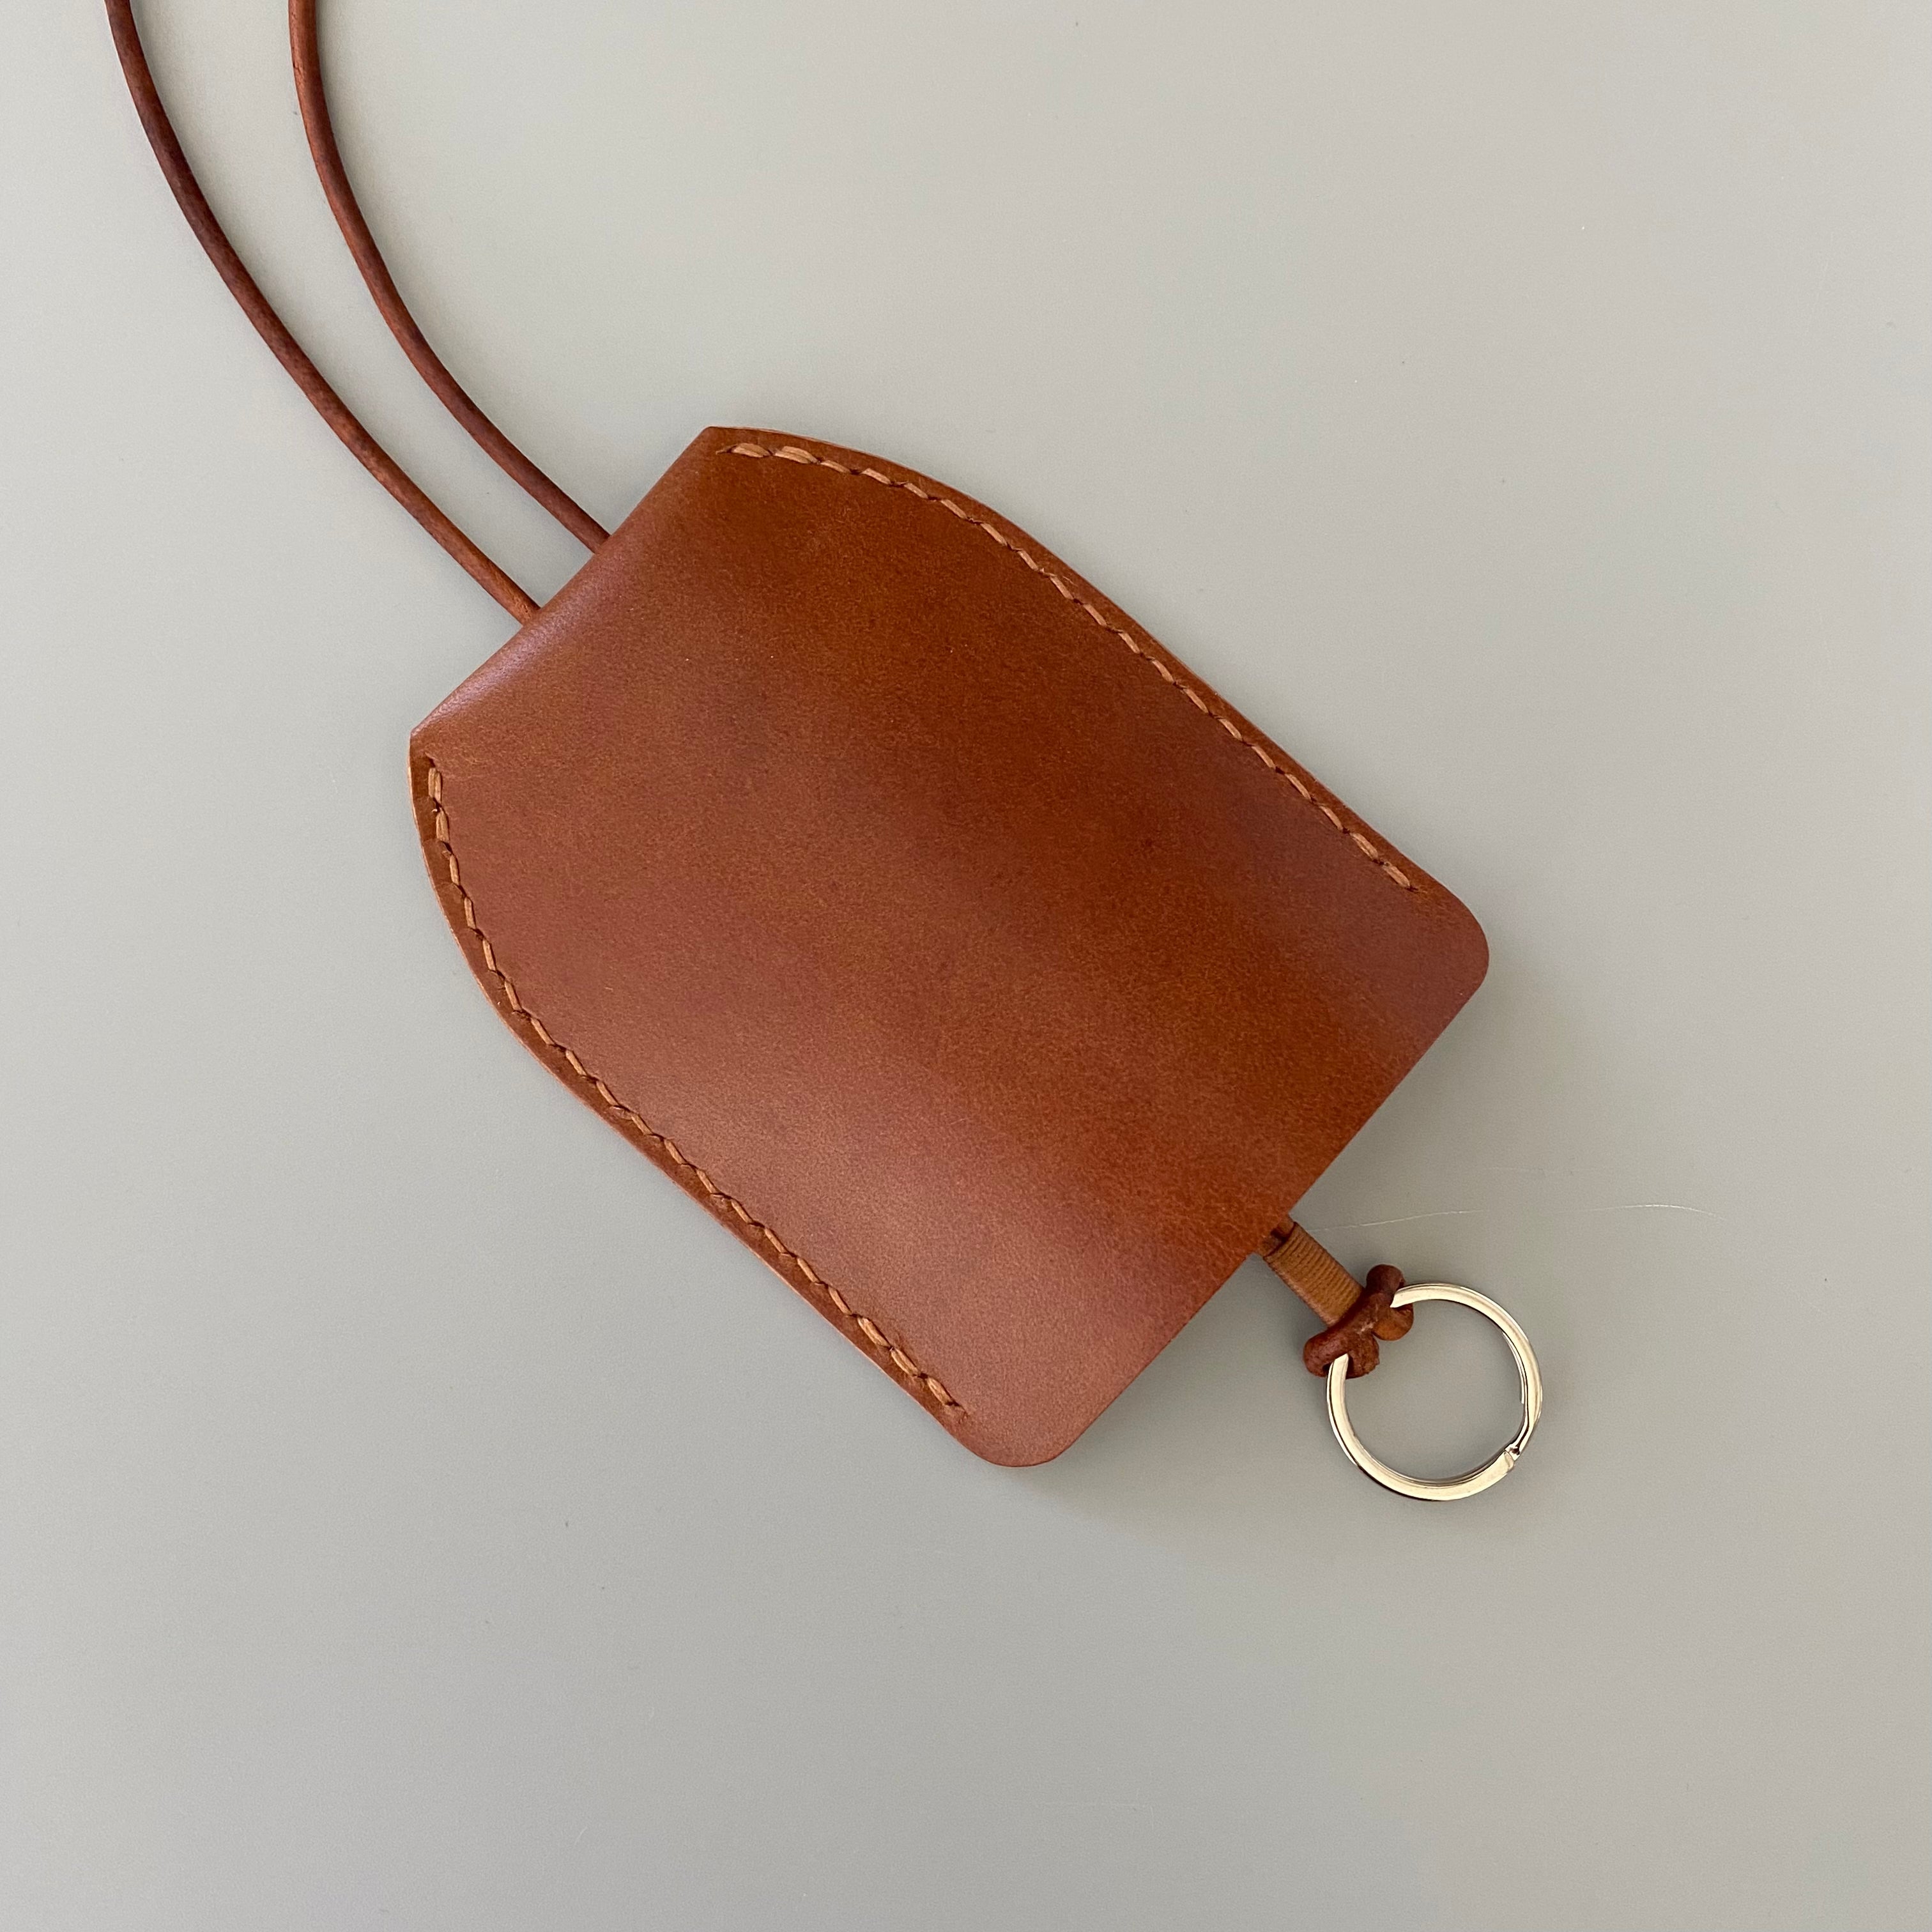 Organize My Bag Key Bell Clochette Dark Brown